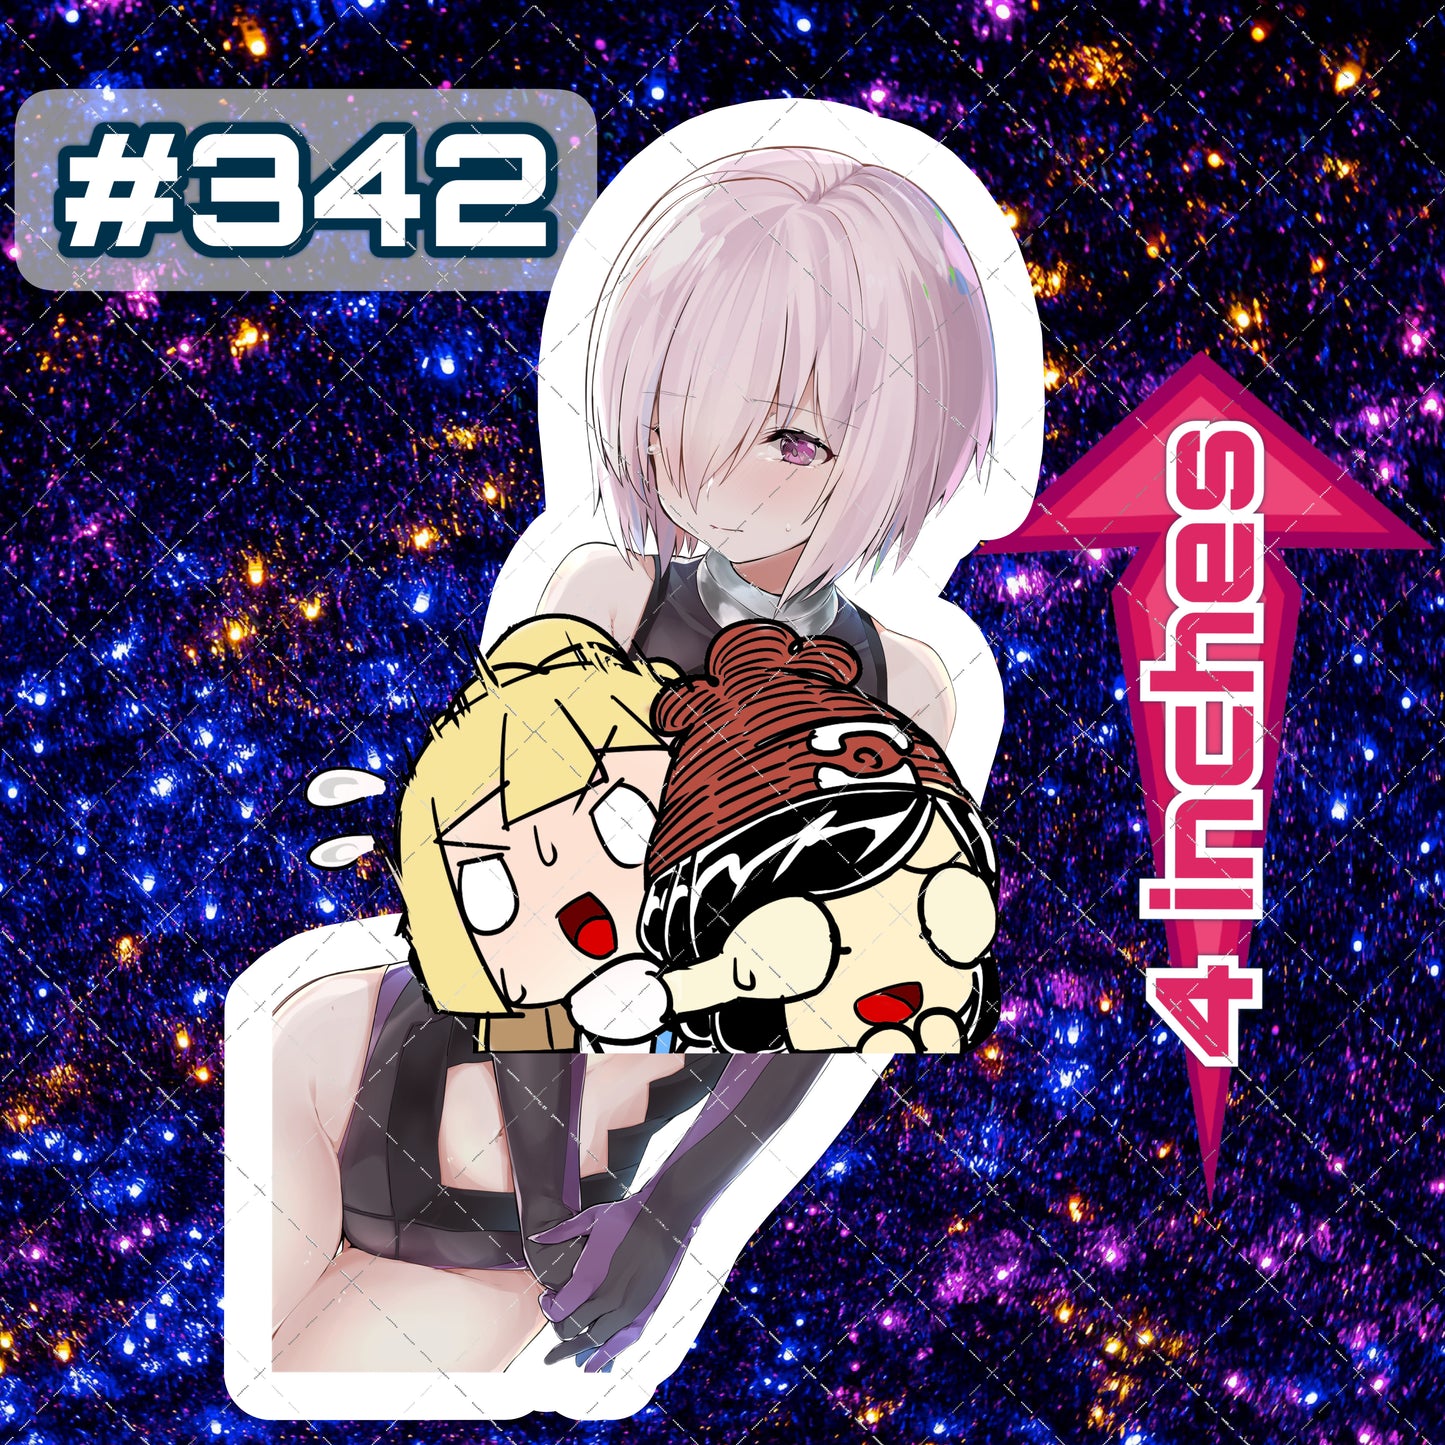 Anime vinyl sticker #342, sexy decal, FateGrandOrder